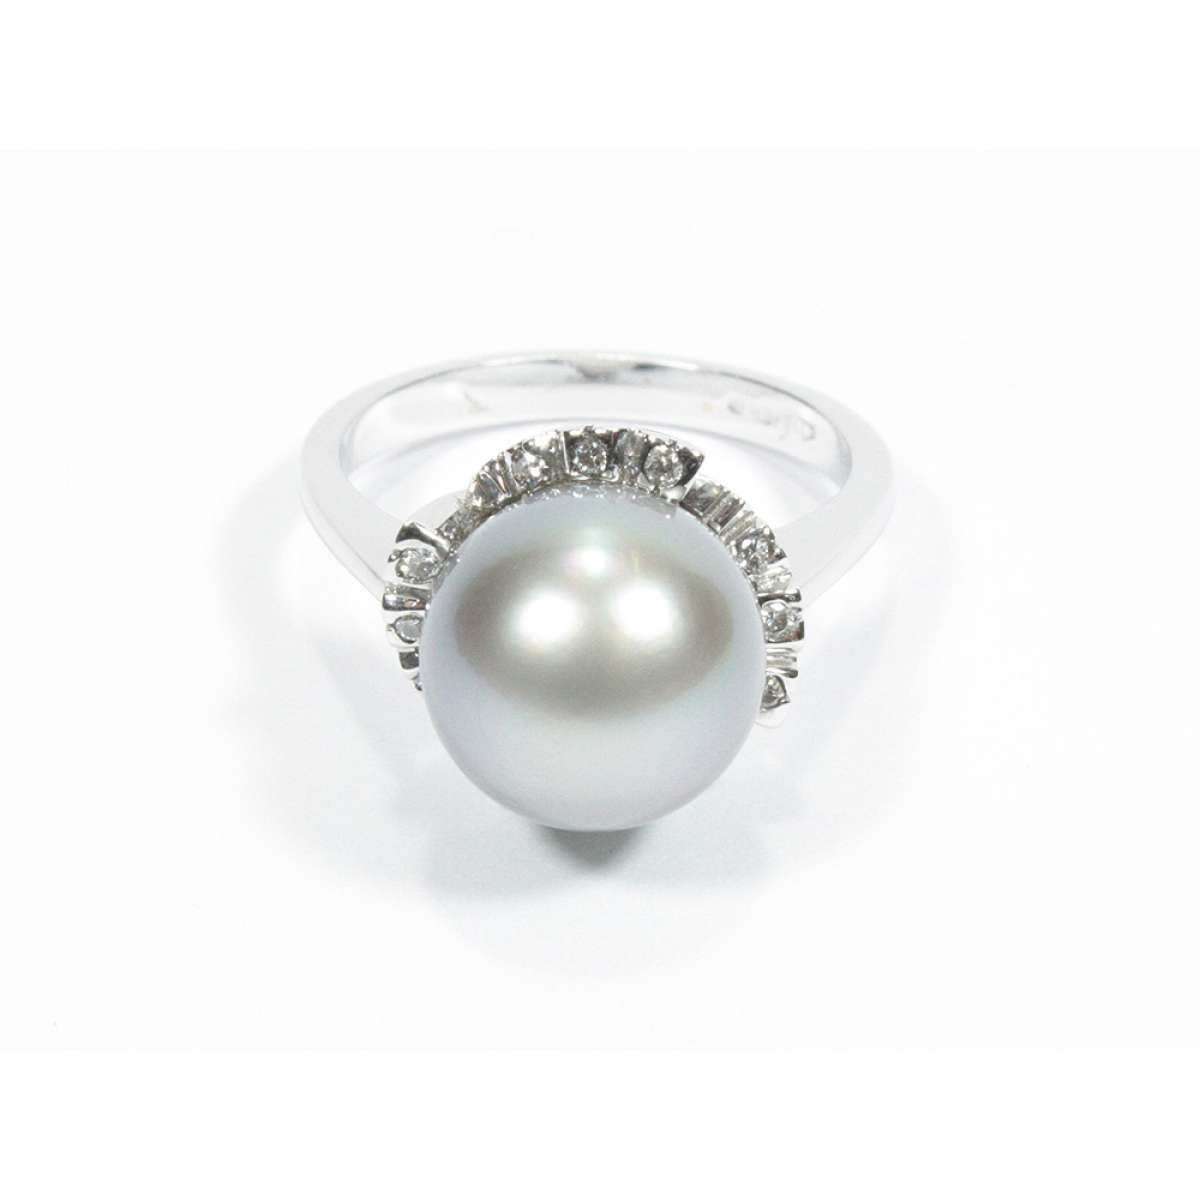 White gold ring with Tahiti gray pearl 11mm 0.12 carats diamonds G-VS1